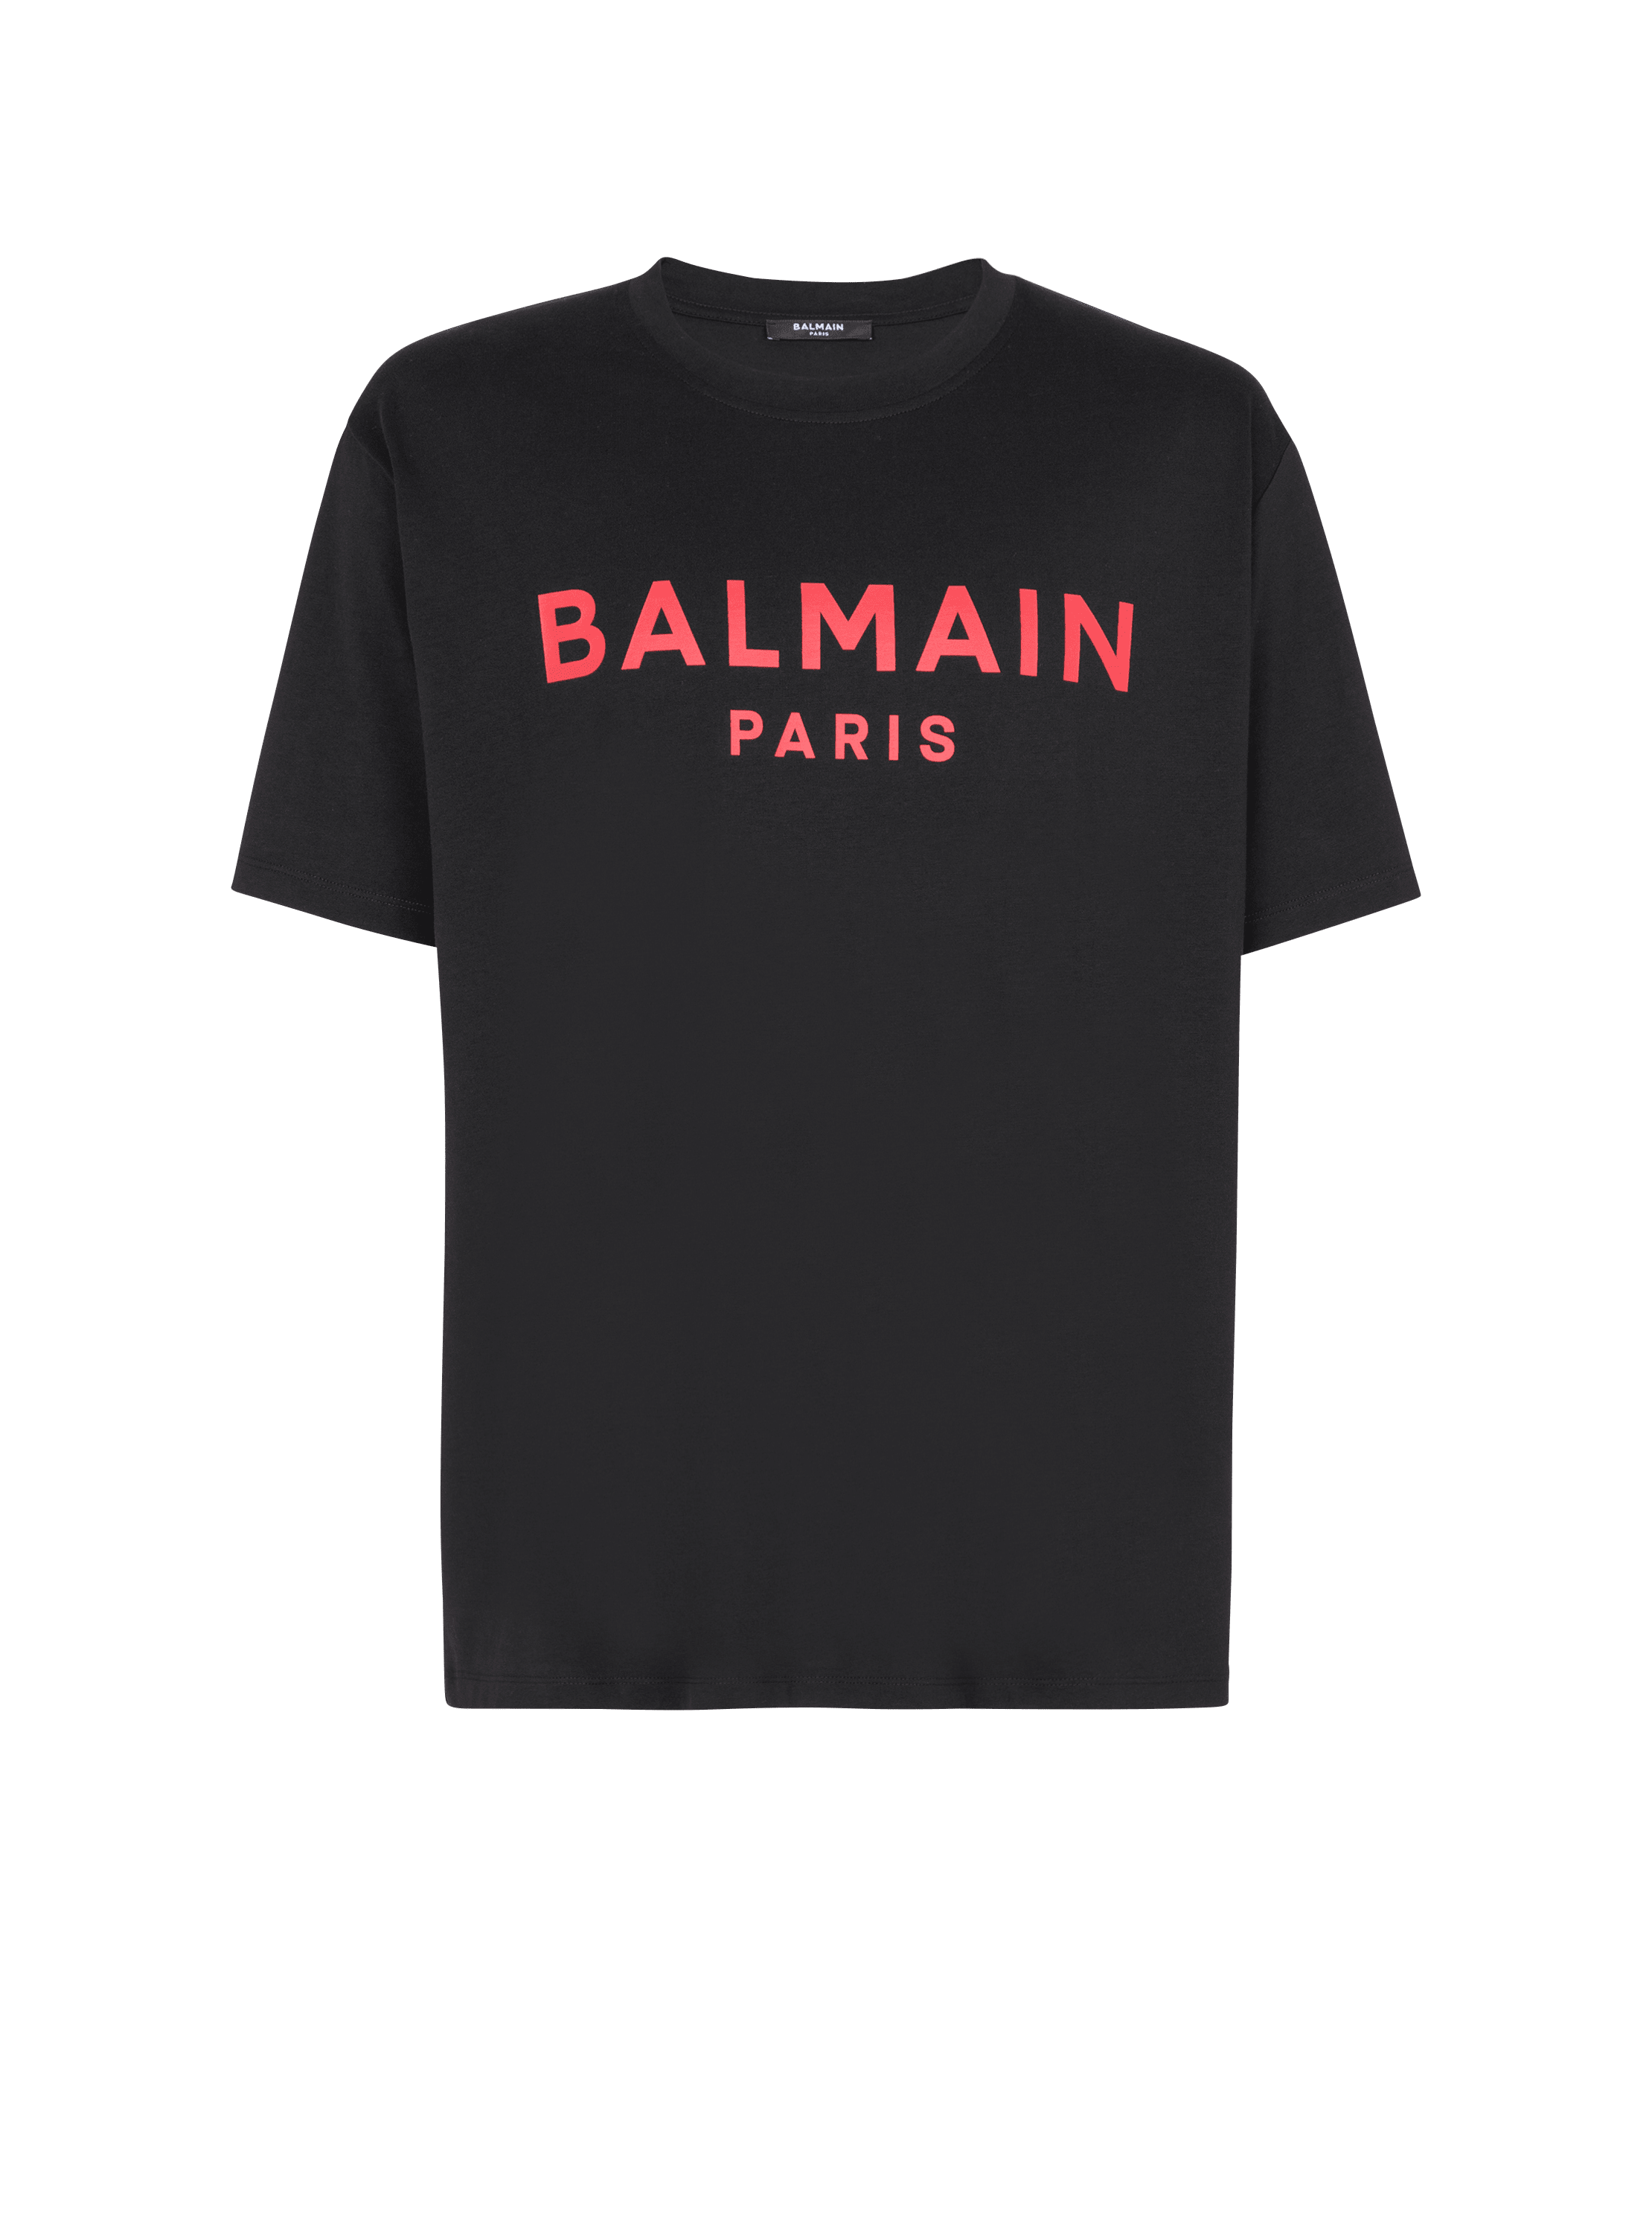 Camiseta con estampado Balmain Paris , negro, hi-res